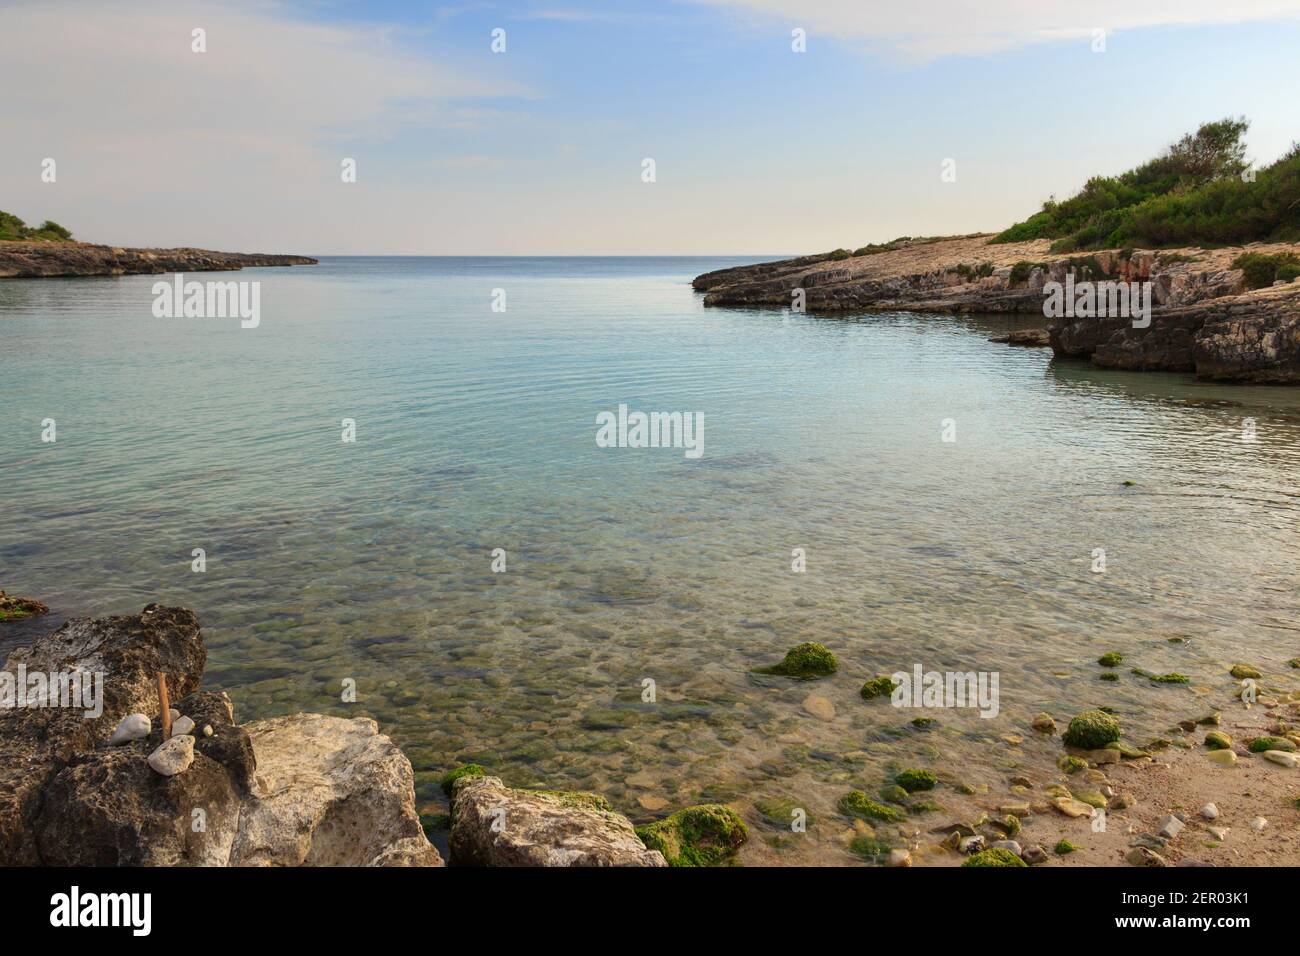 View of the Regional Natural Park Porto Selvaggio and Palude del Capitano in Puglia (Italy)  with rocky coast and Mediterranean scrub. Stock Photo